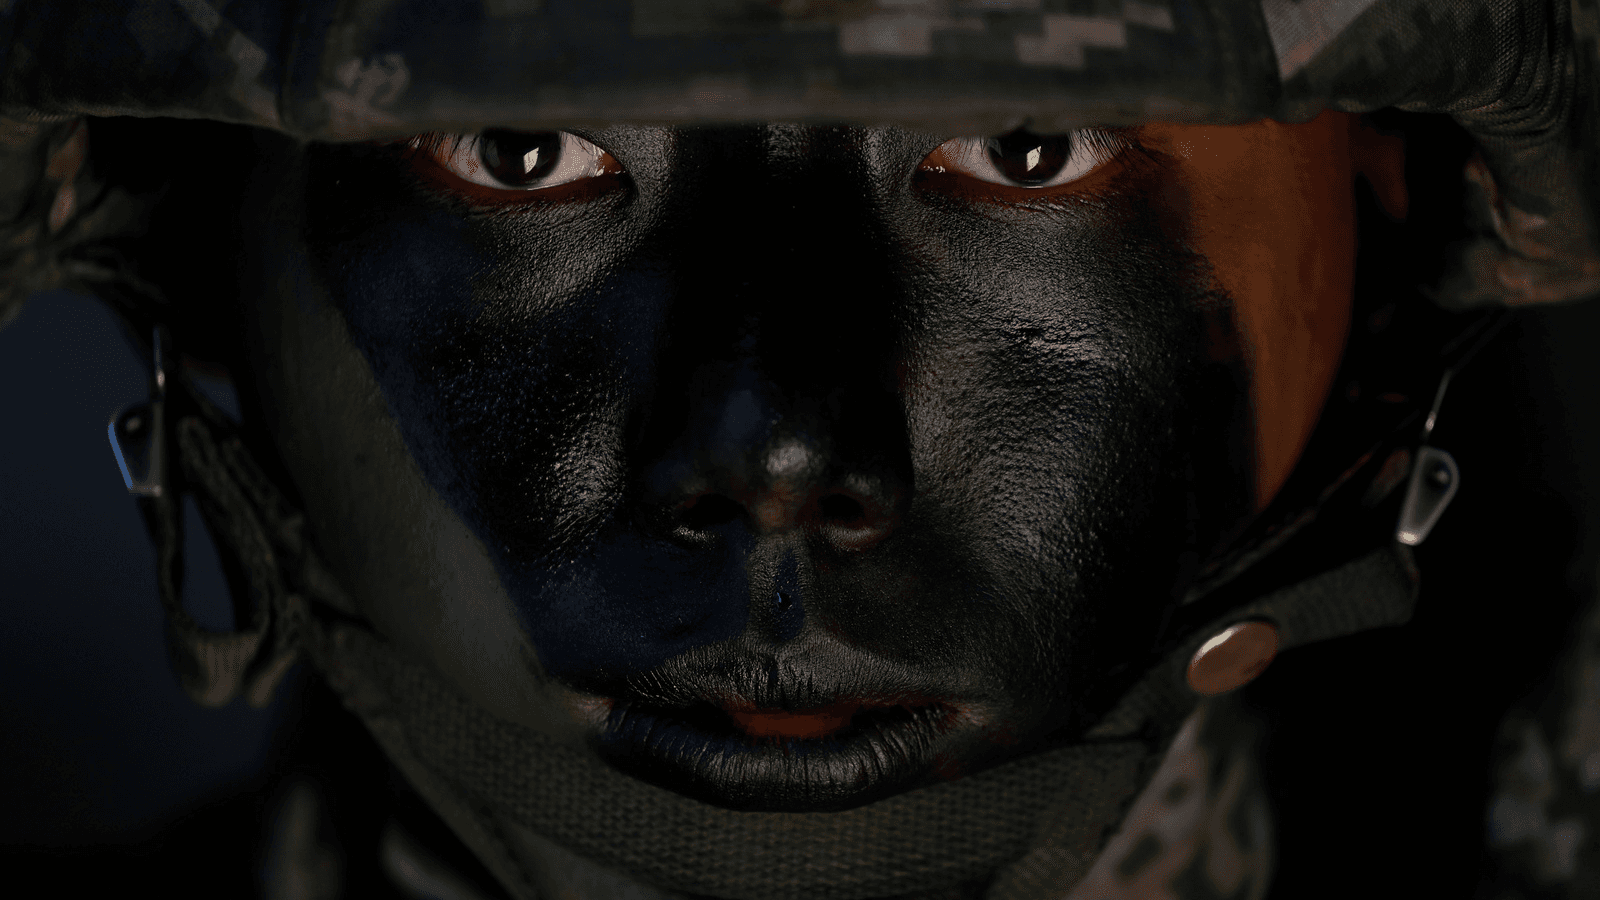 a korean soldier's face